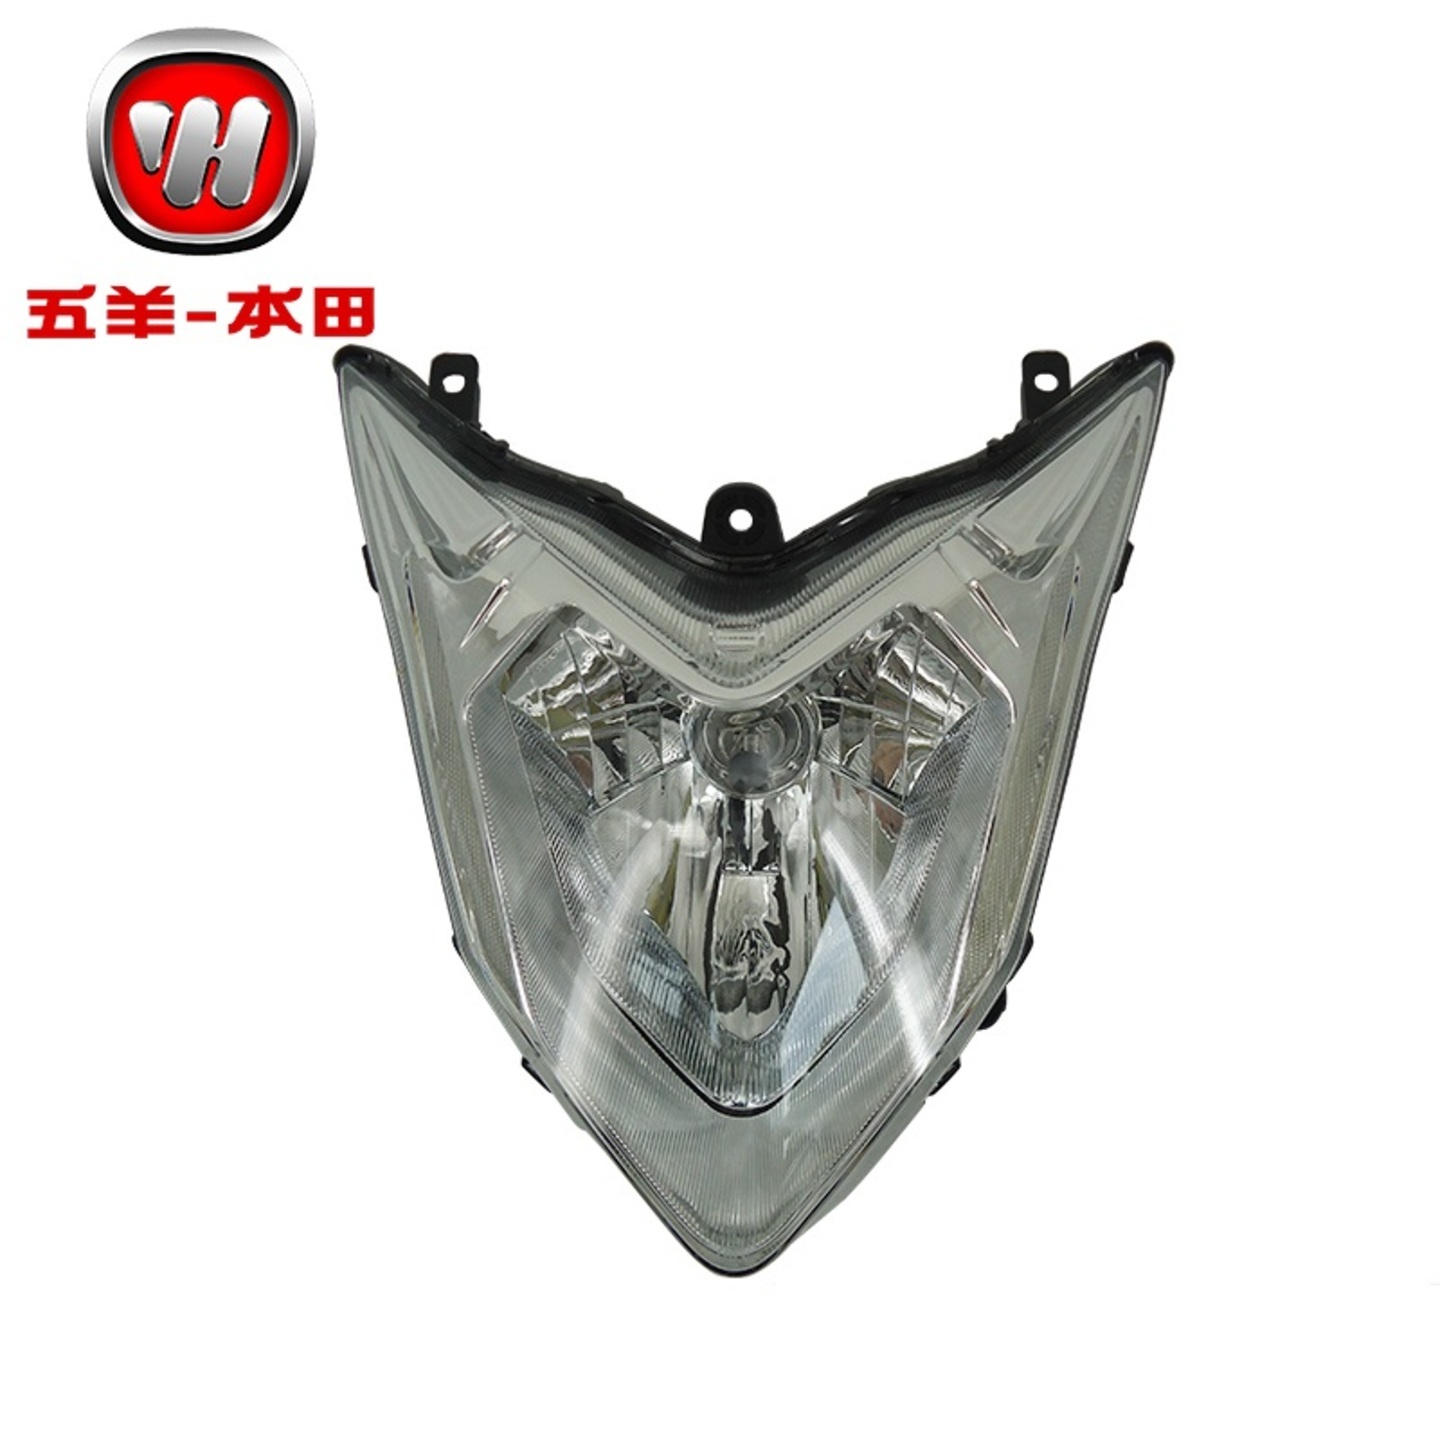 Honda CB190X headlight head lamp head light headlamp